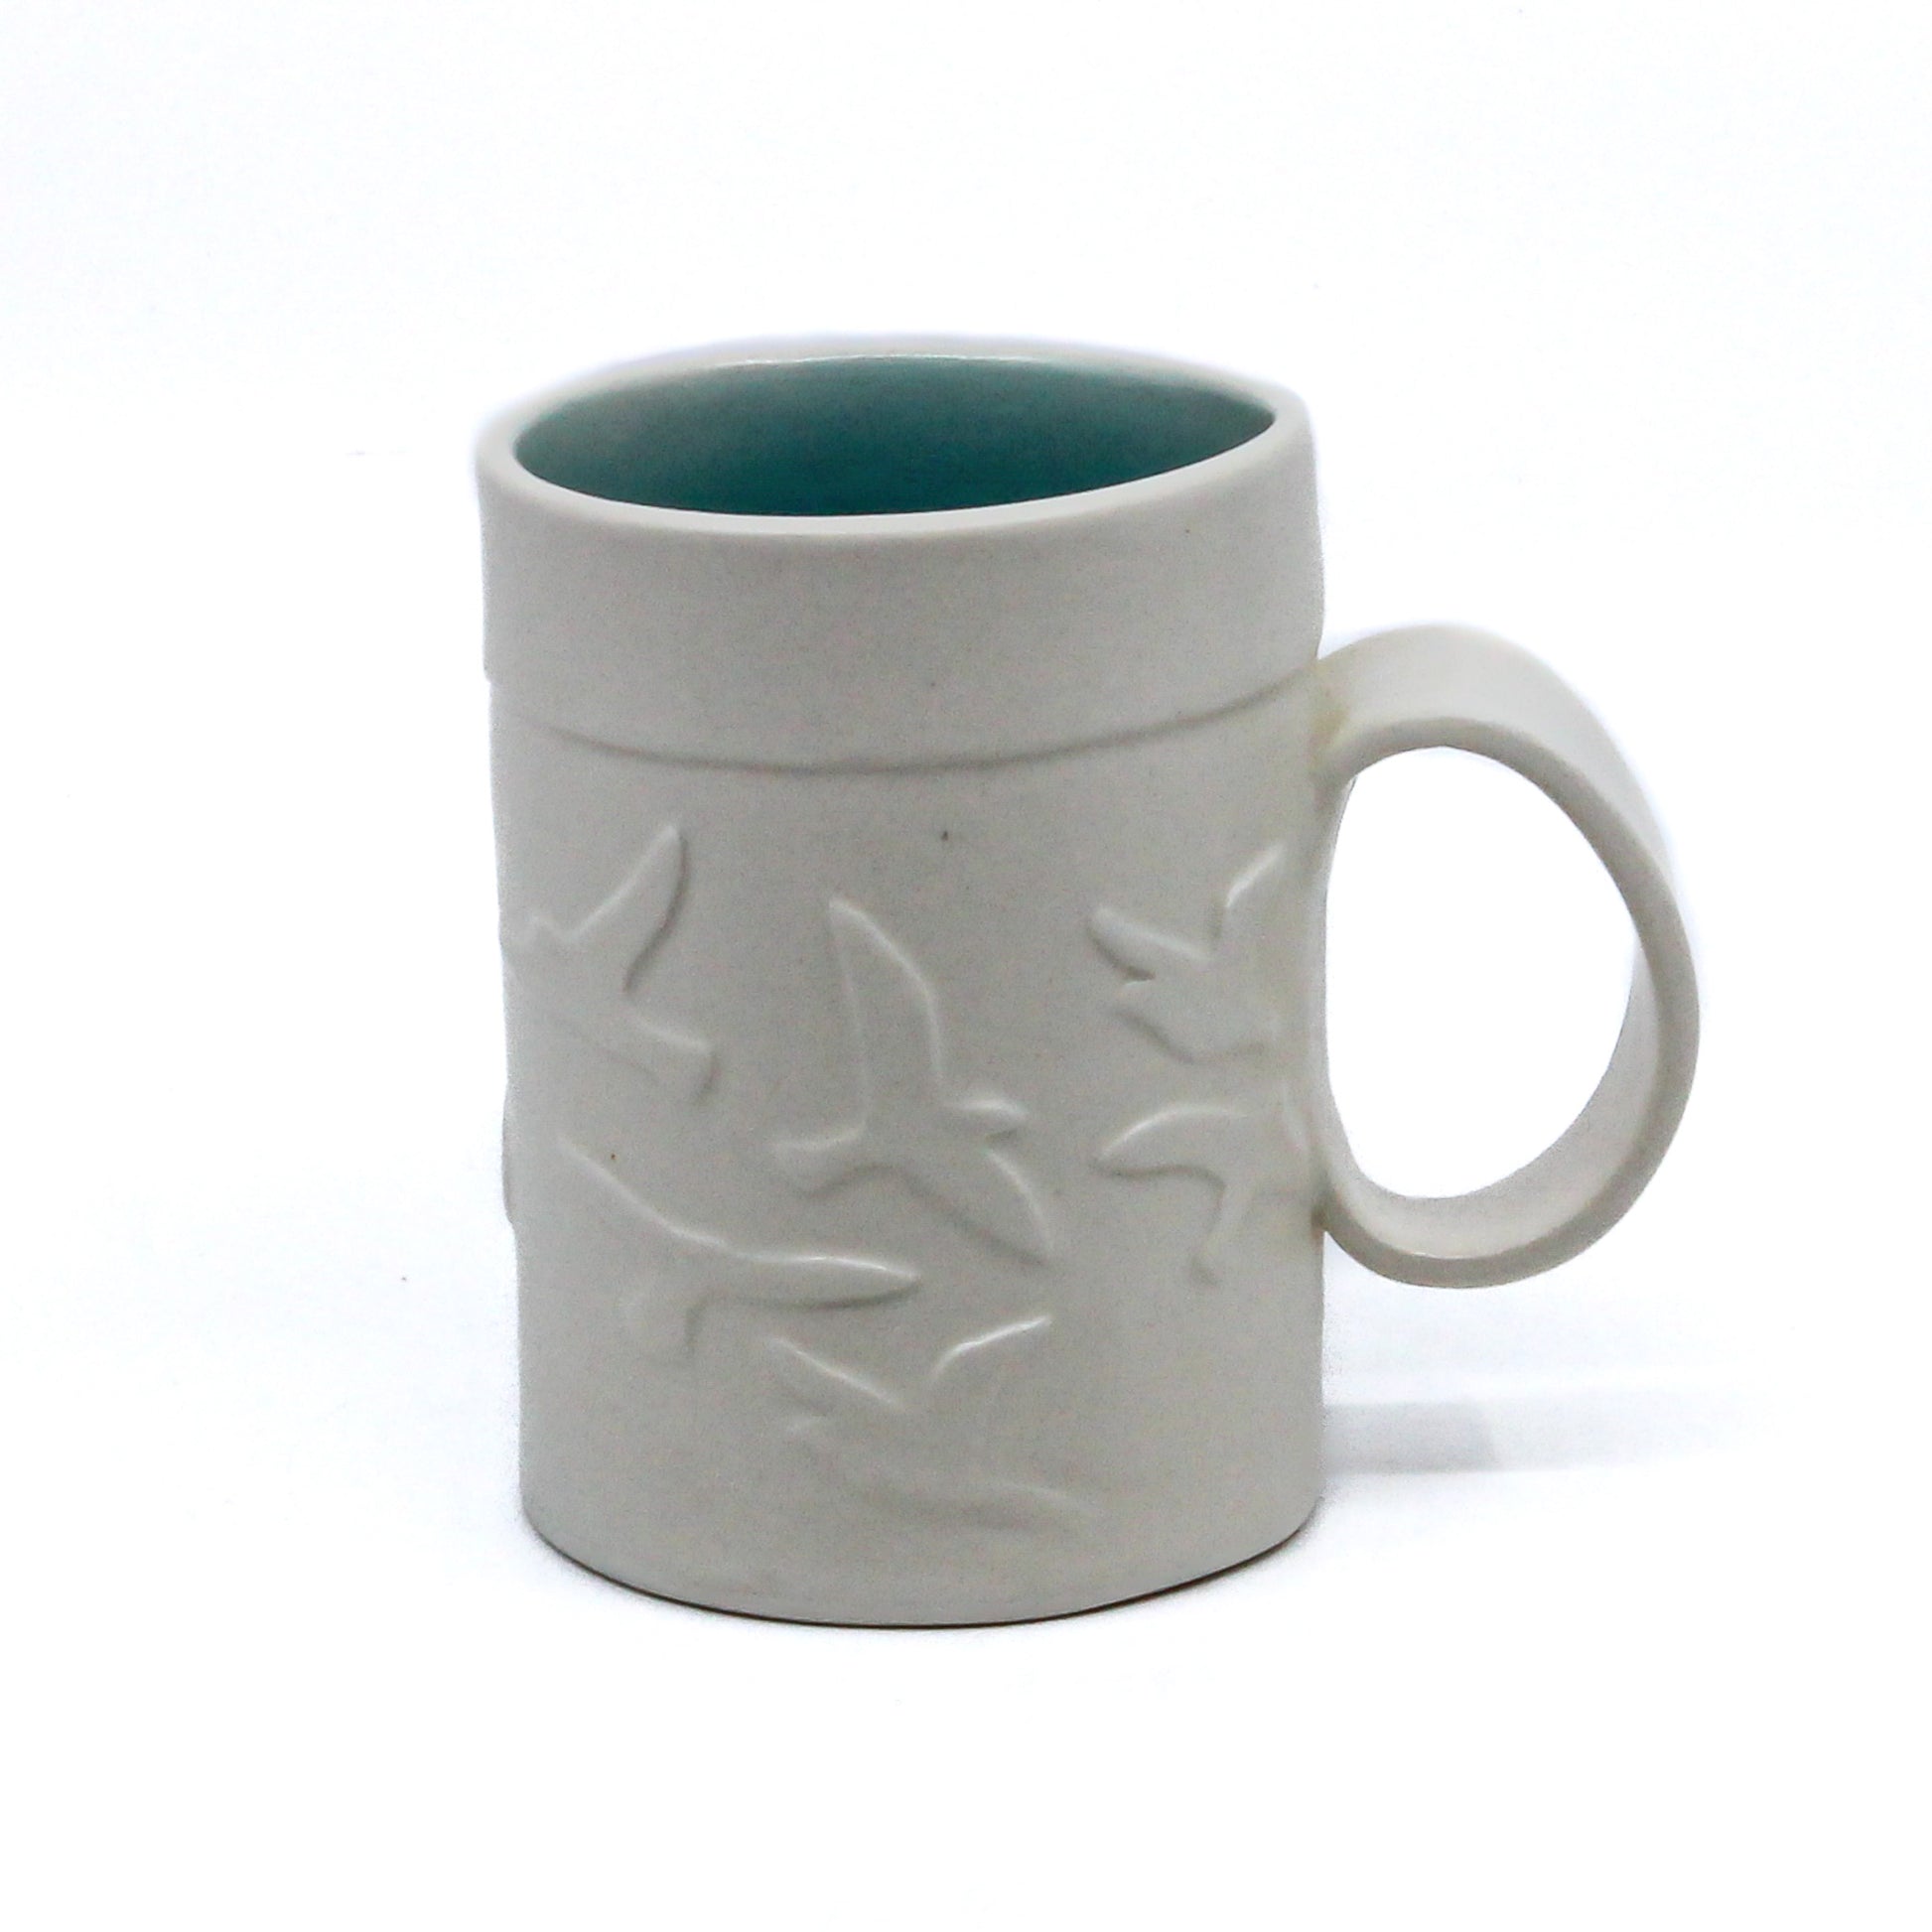 White mug with birds and turquoise inside